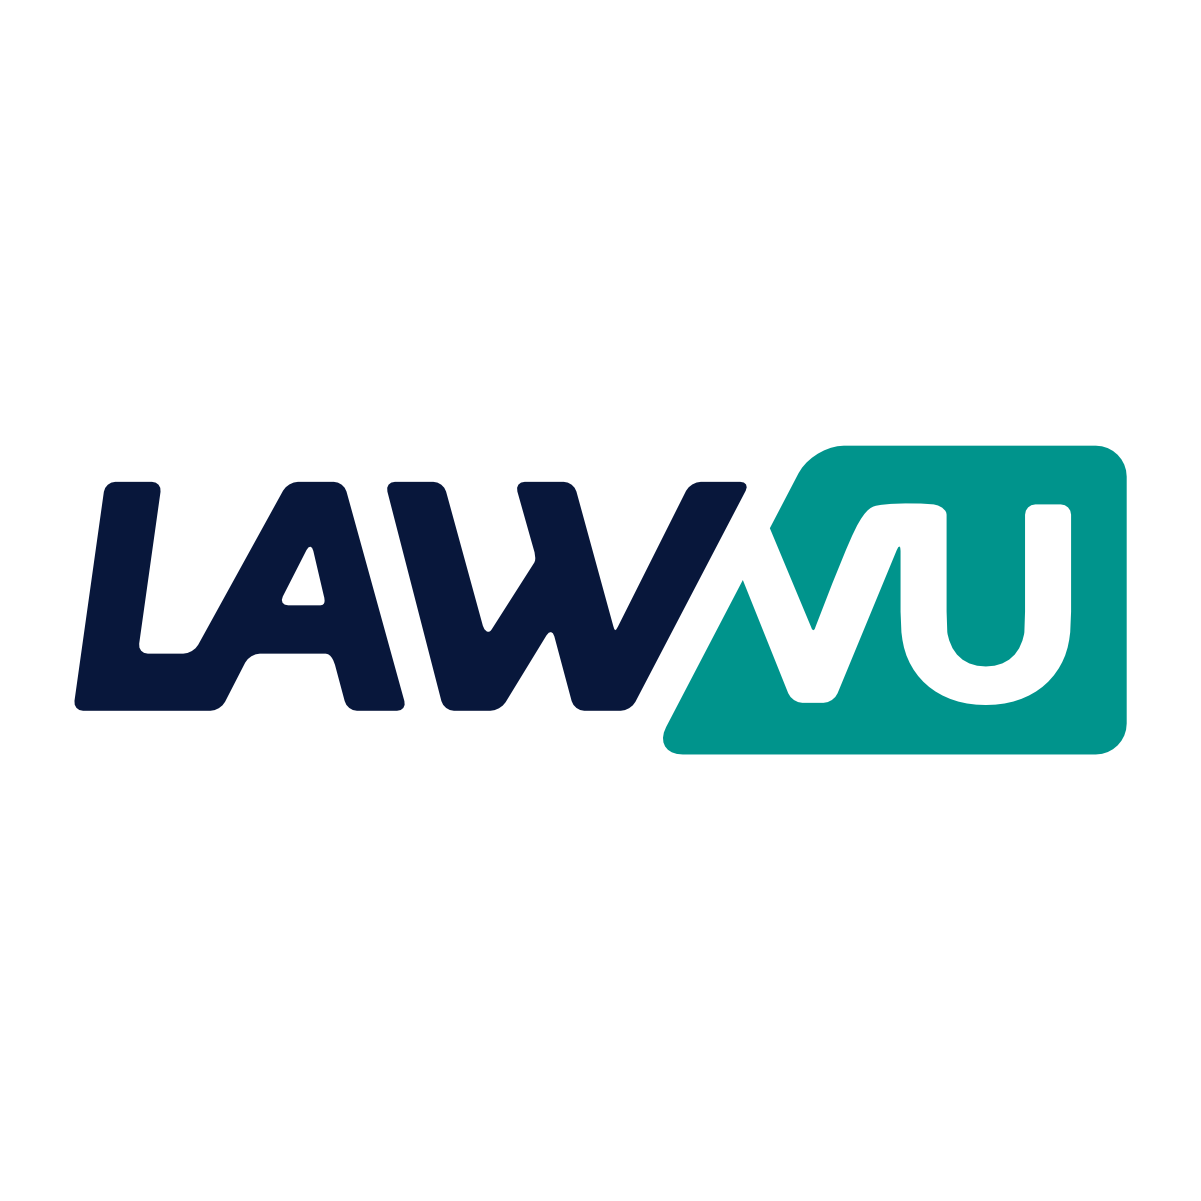 LawVu Logo